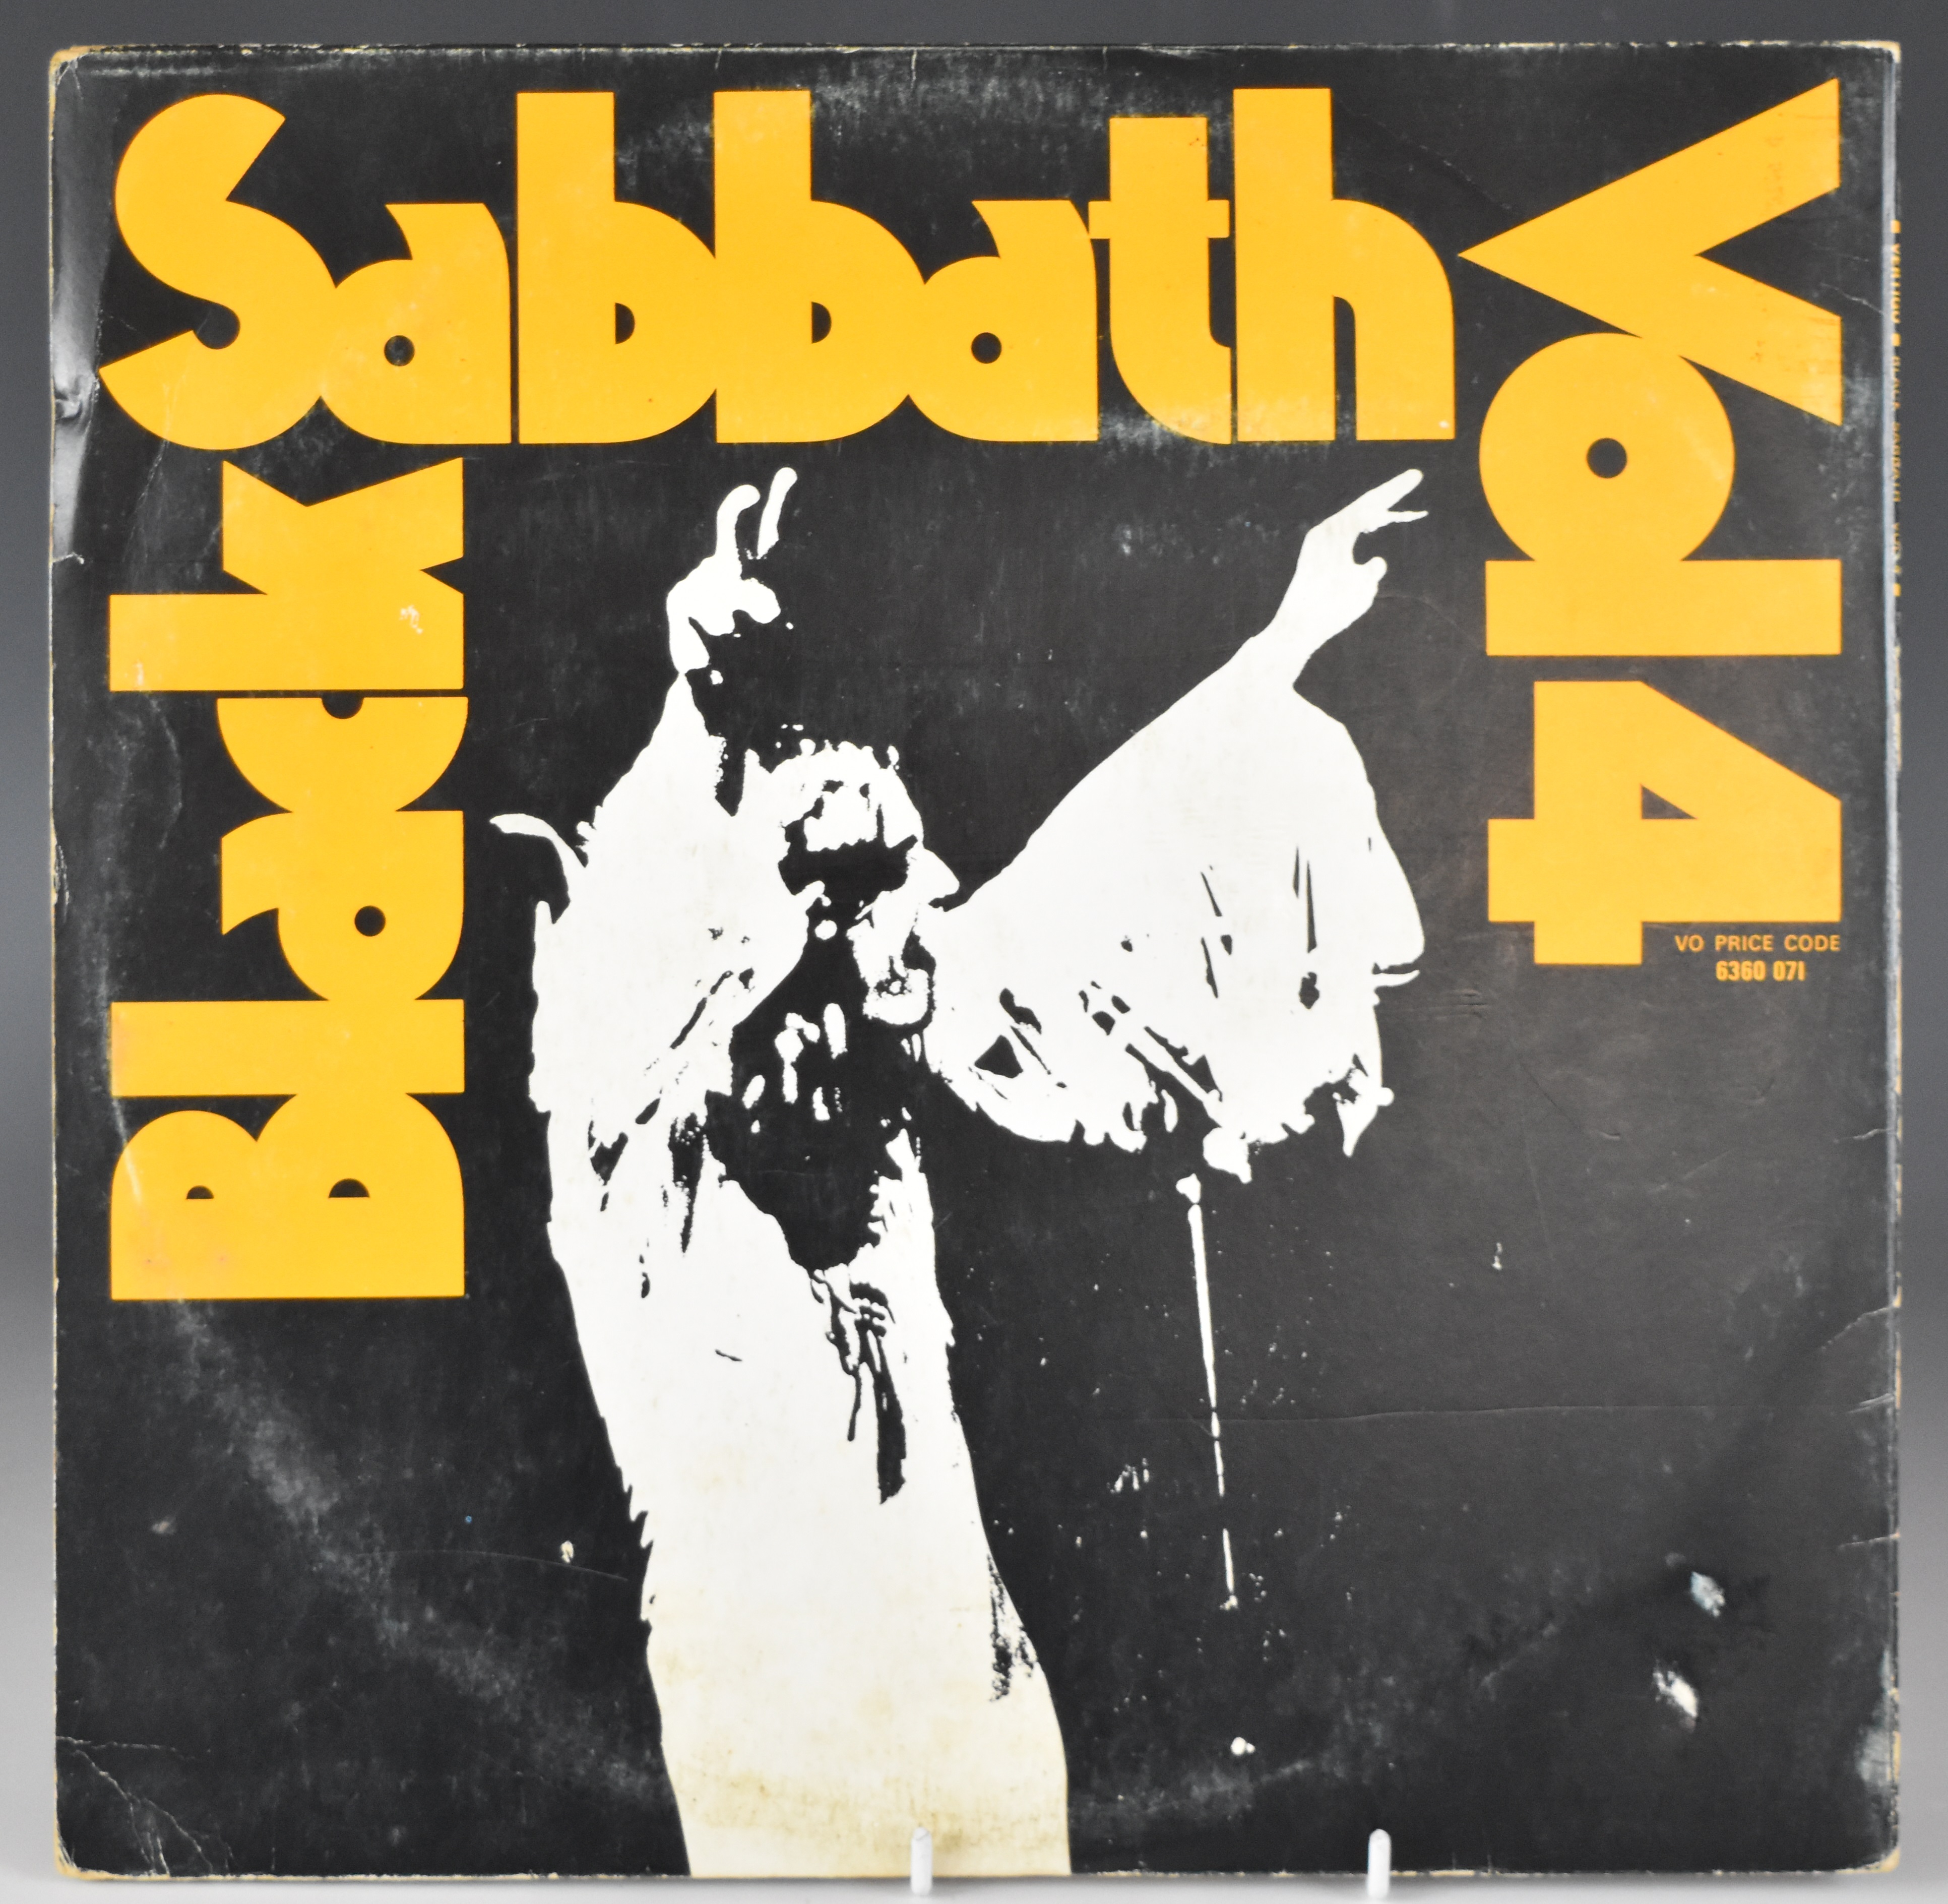 Black Sabbath - Volume 4 (6360-071) Vertigo Dutch pressing with black and white swirls, record - Image 2 of 4